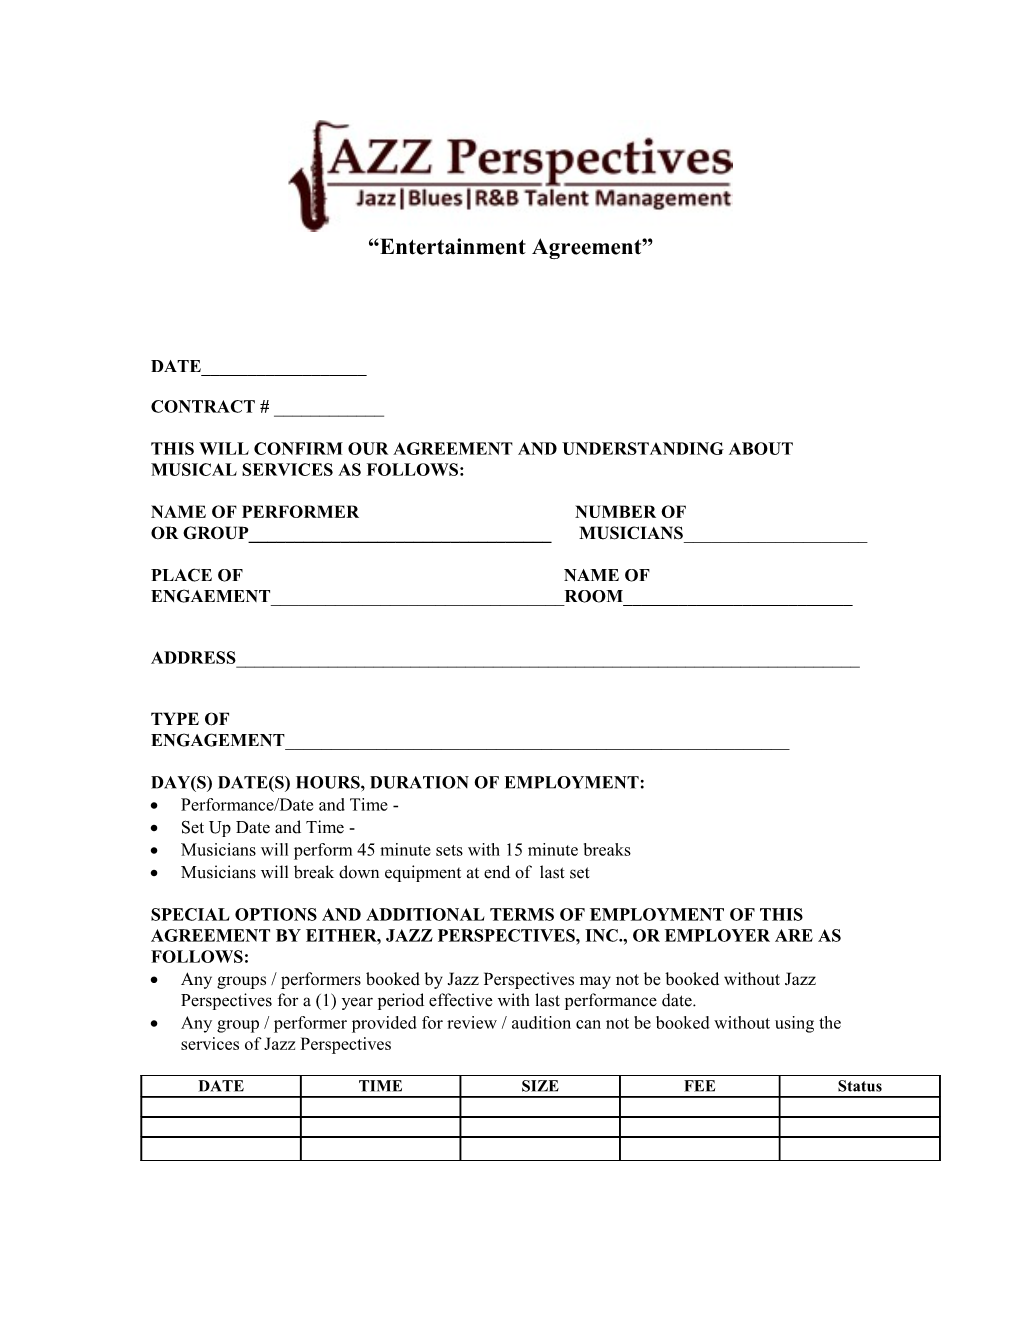 Jazz Perspectives, Inc